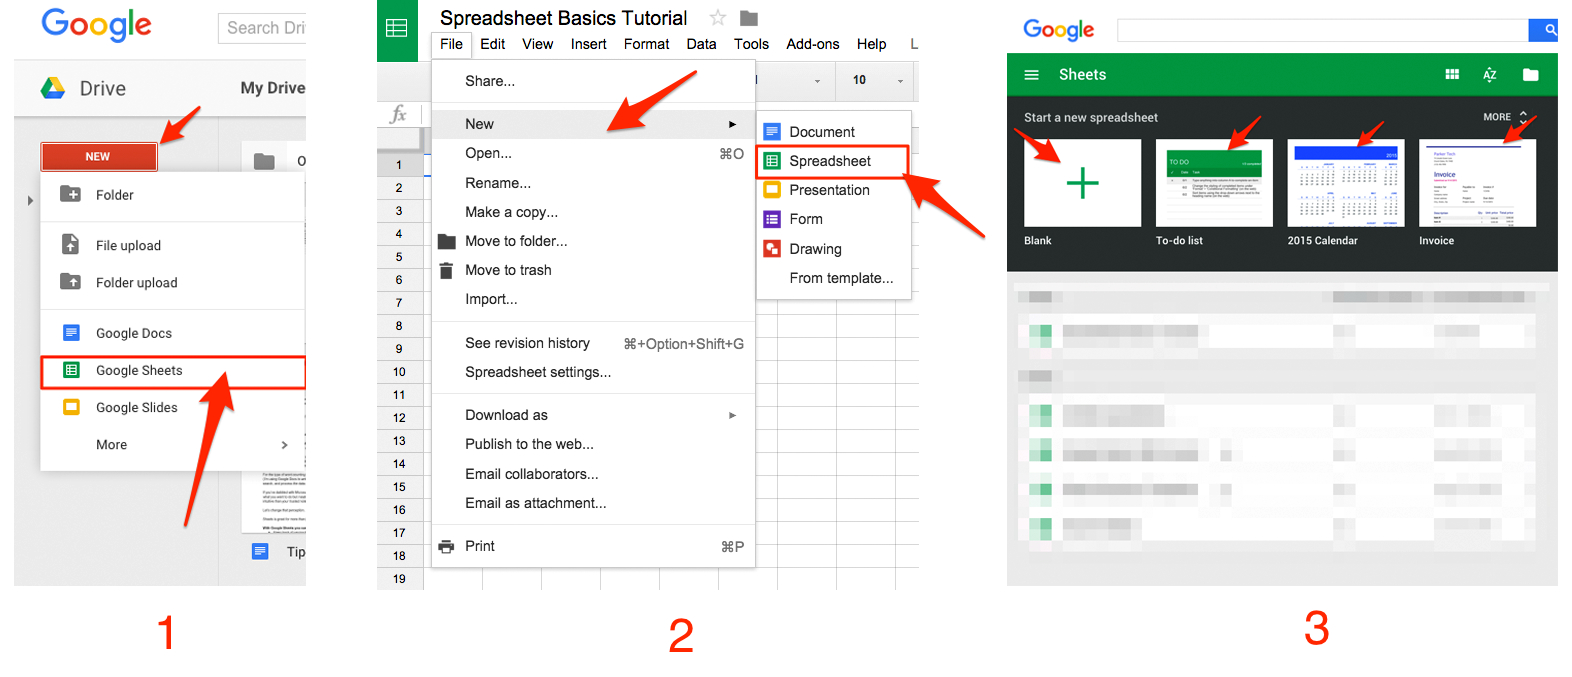 Basic Spreadsheet Intended For Google Sheets 101: The Beginner's Guide To Online Spreadsheets  The